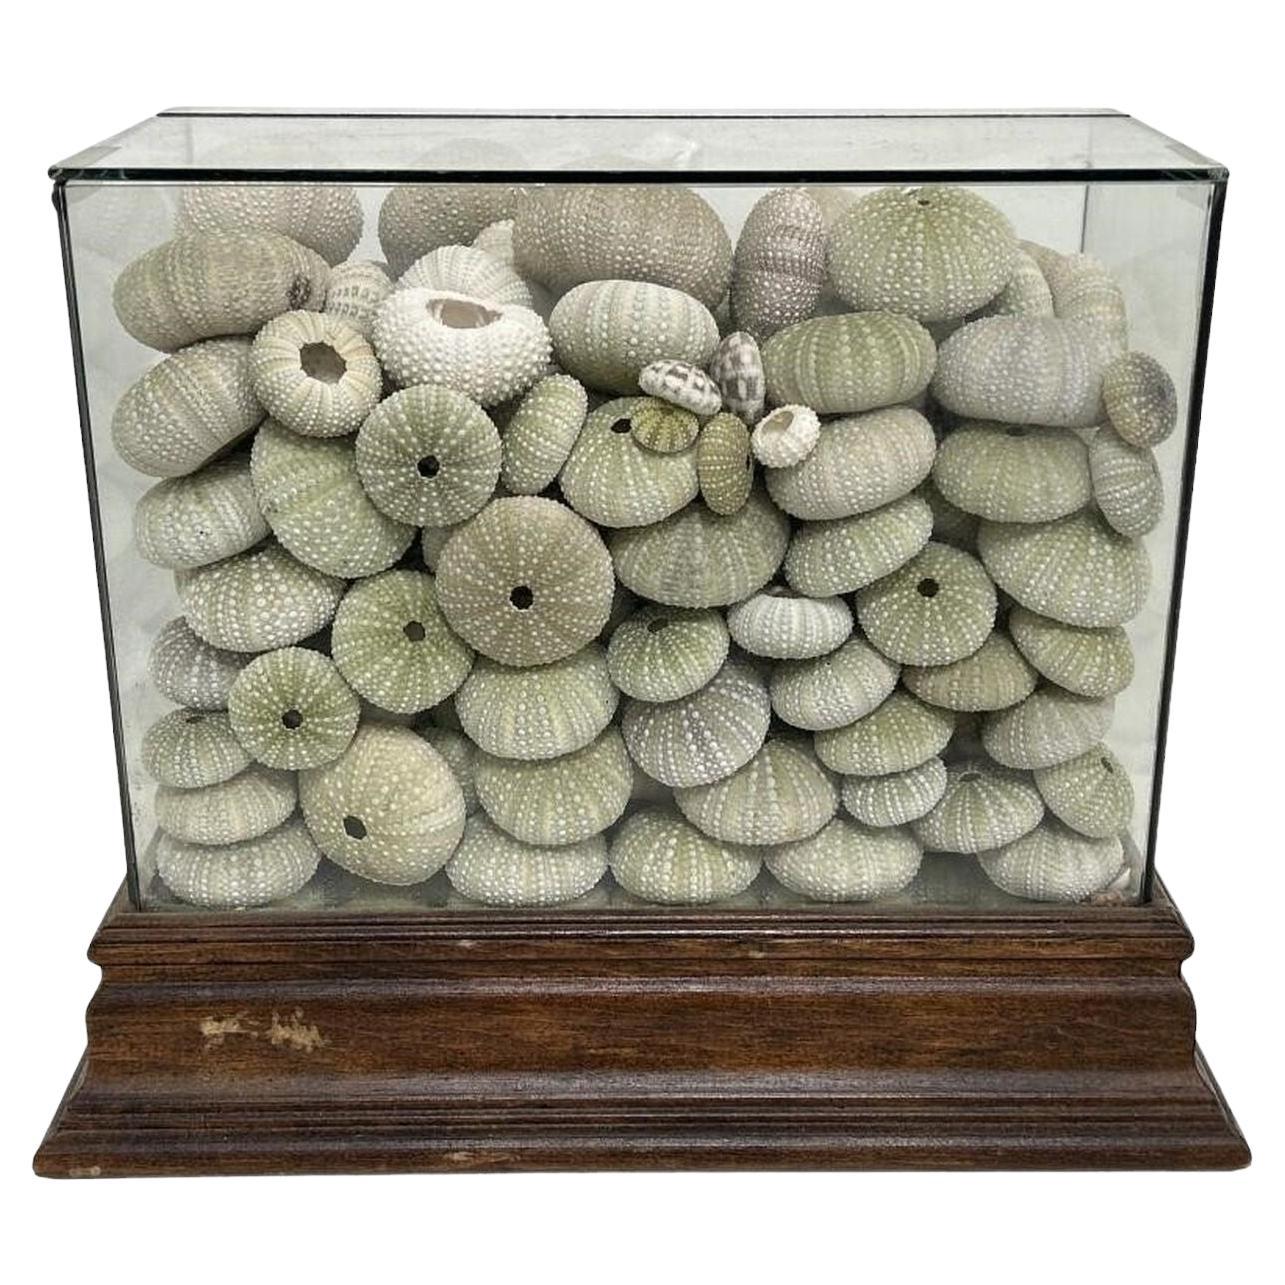 Large Glass Box Display of Sea Urchin Shells 11H